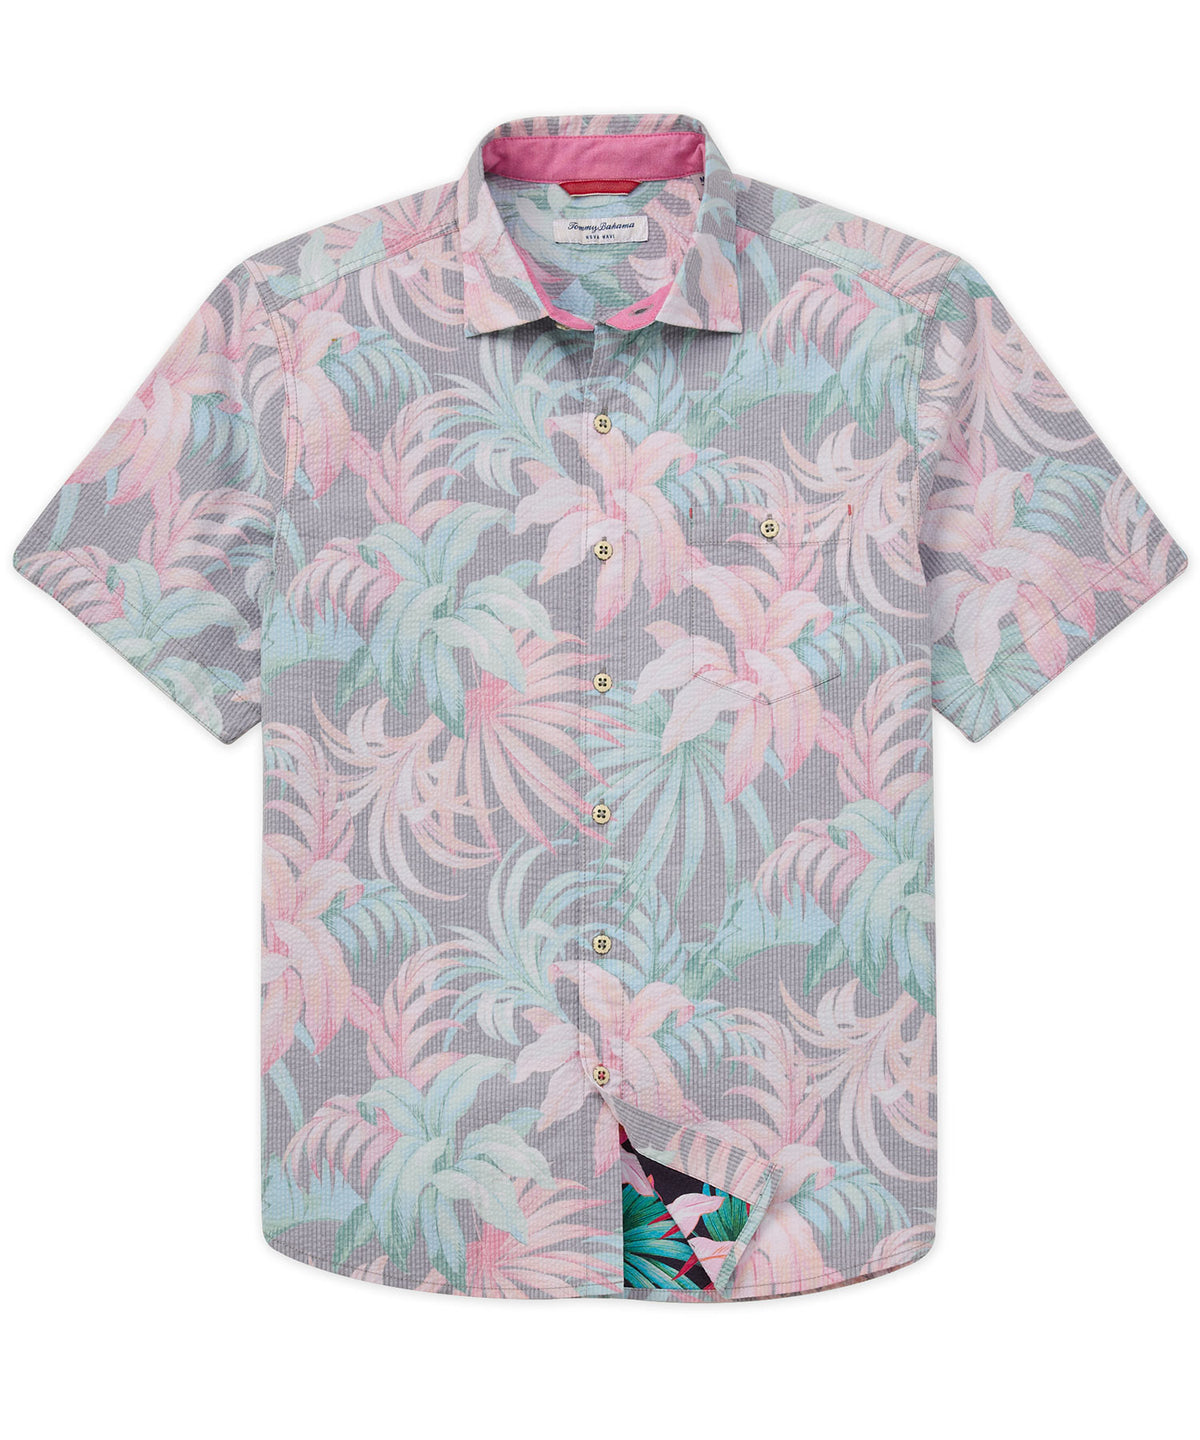 Tommy Bahama Short Sleeve Nova Wave Midnight Tropics Printed Seersucker Sport Shirt, Big & Tall